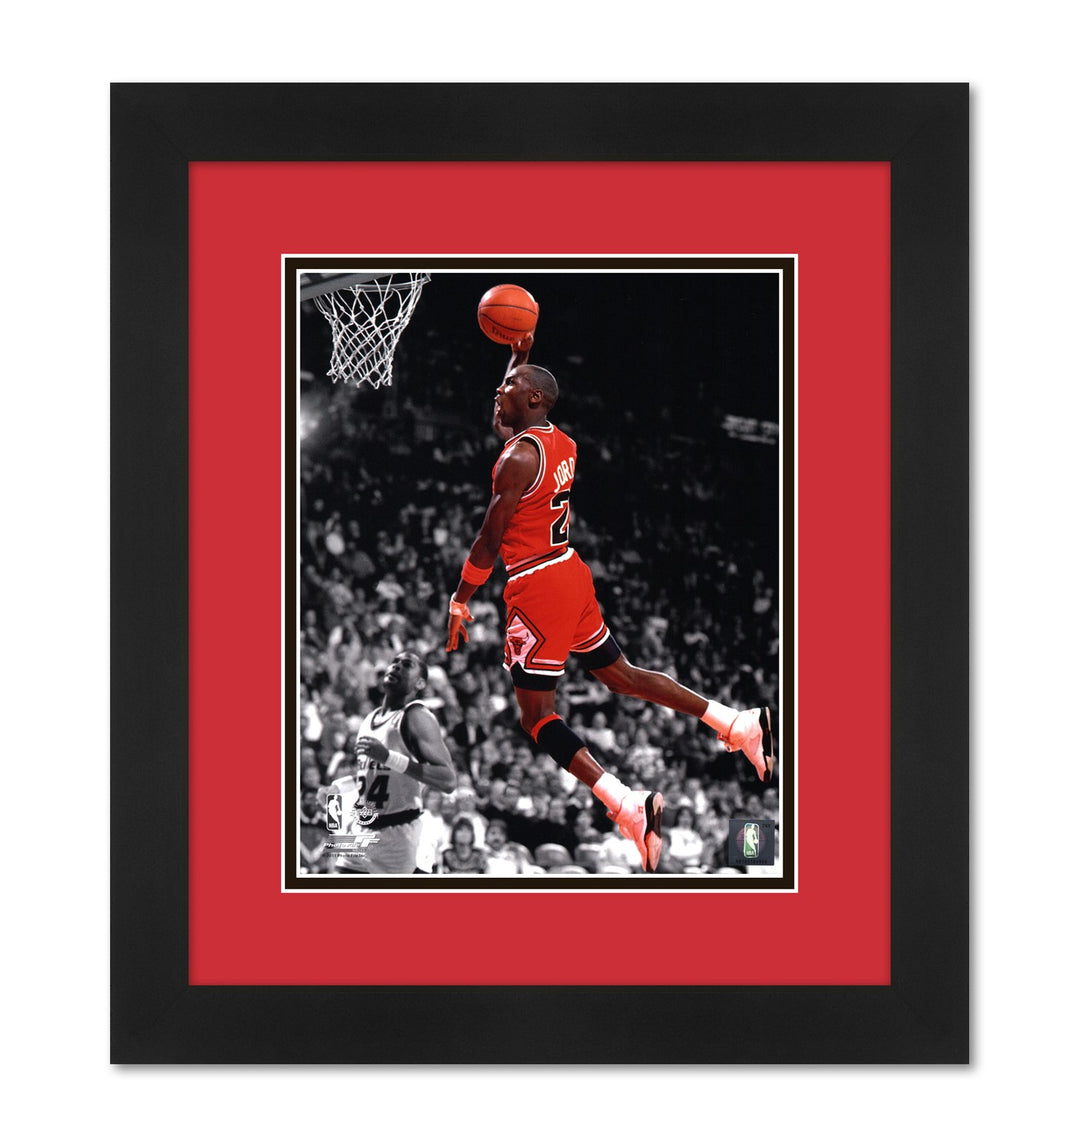 Michael Jordan Chicago Bulls Spotlight Photo Professionally Framed 13 x16 High Quality Black Frame with Team Color Matting